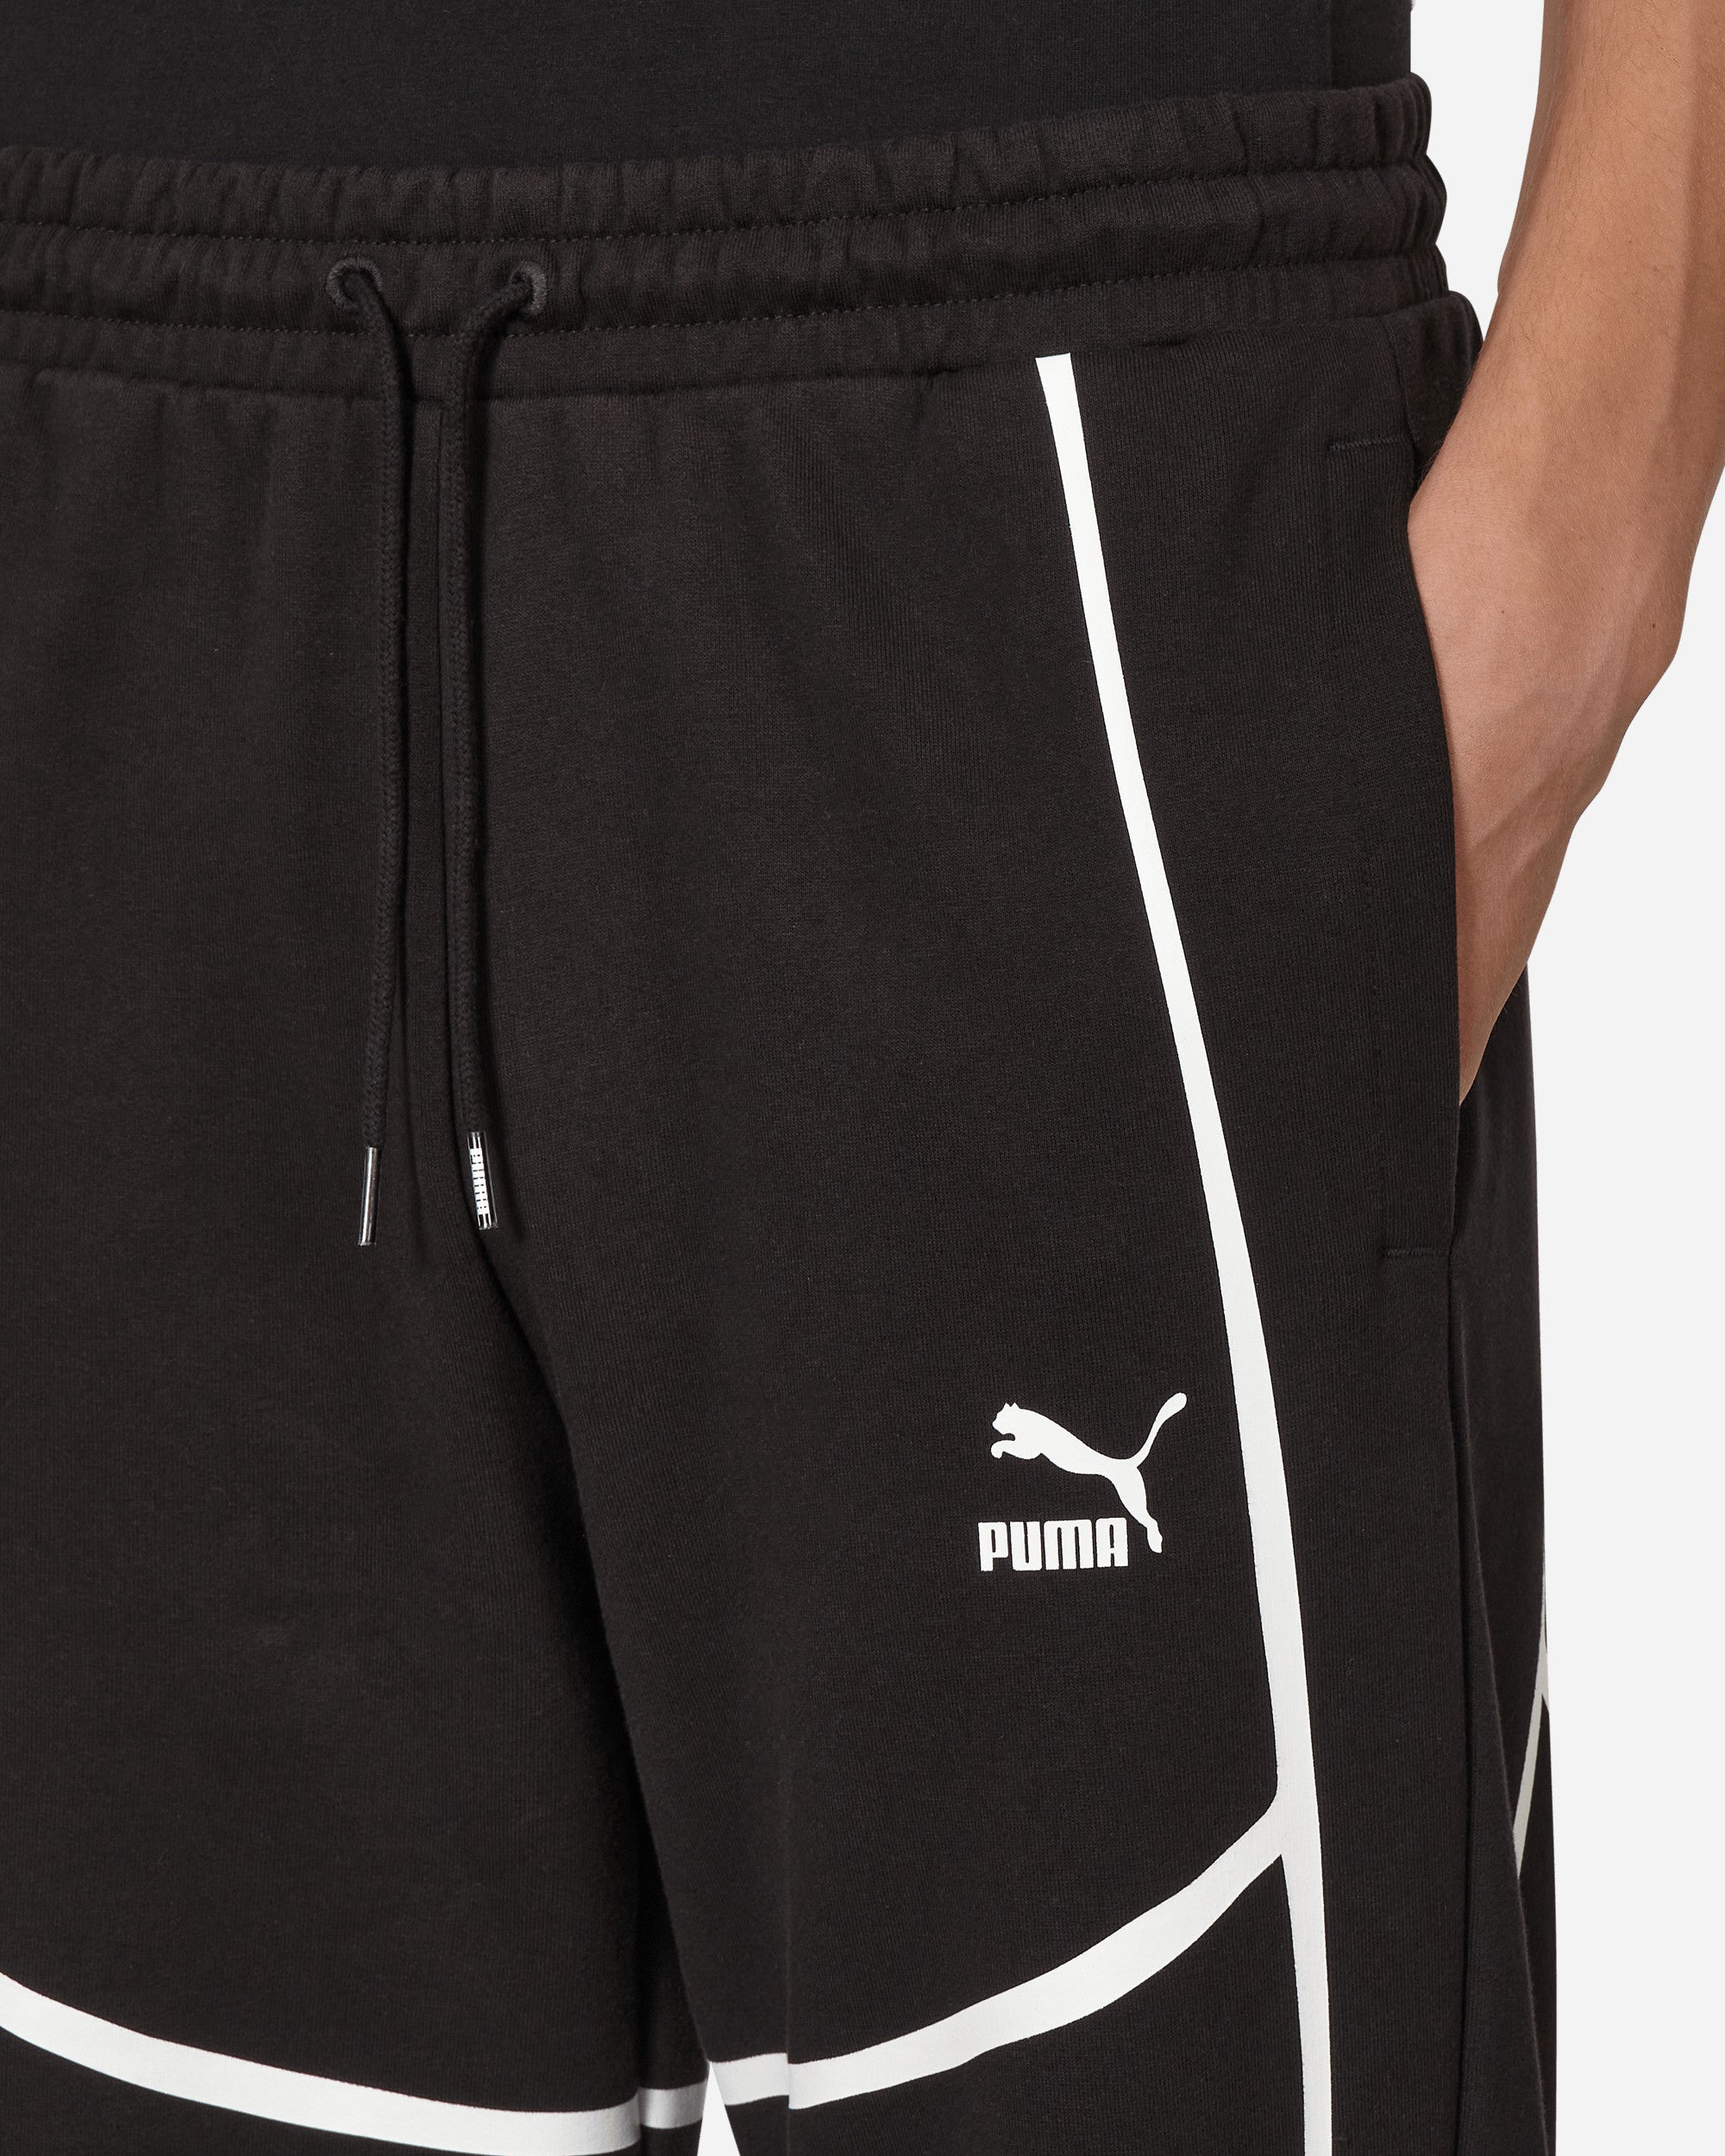 Puma Puma X Joshua Vides Sweatpants Puma Black Pants Sweatpants 535434-01